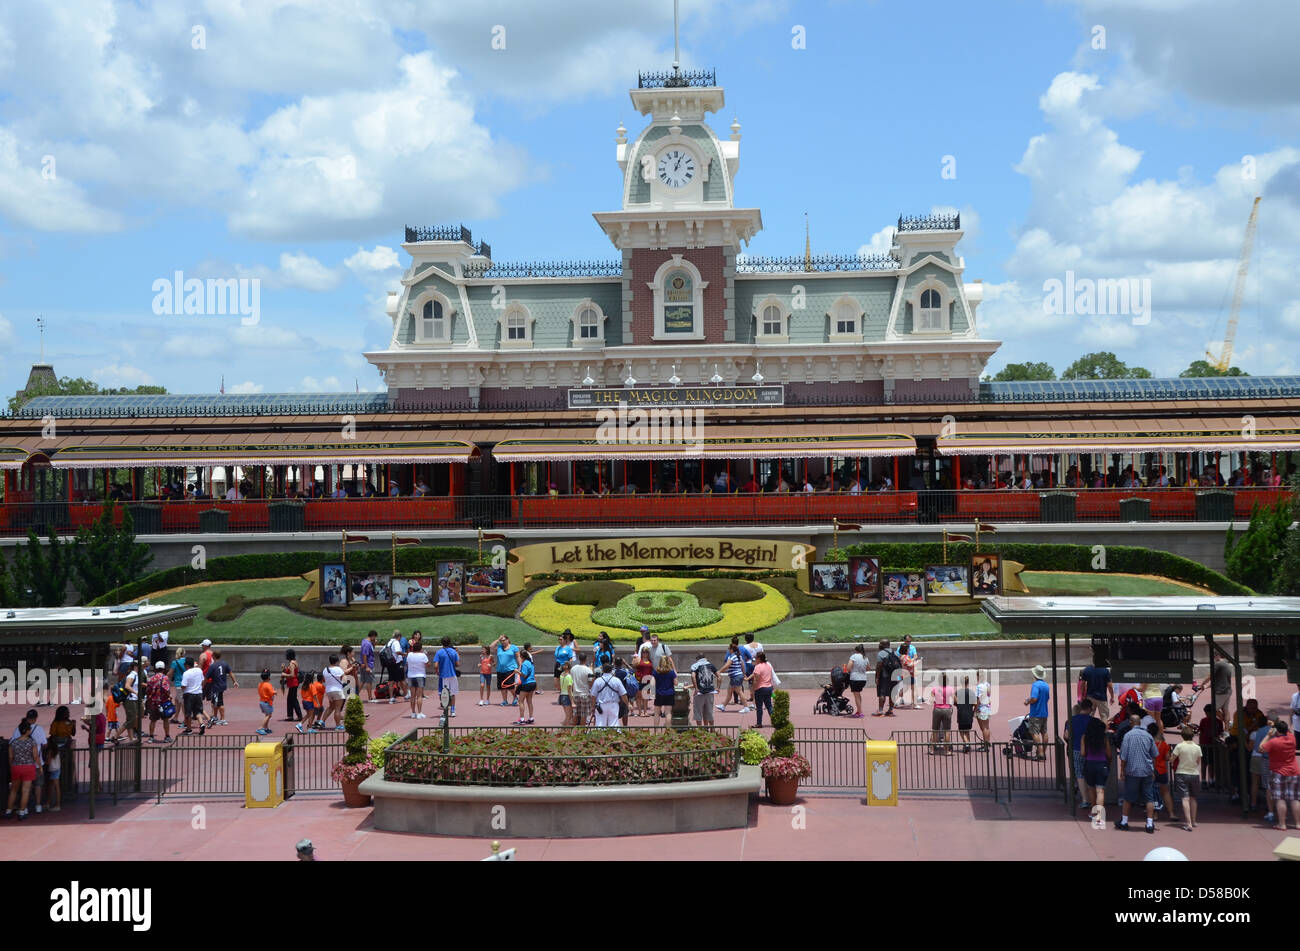 Entrance to Disney's Magic Kingdom Orlando Florida Stock Photo - Alamy